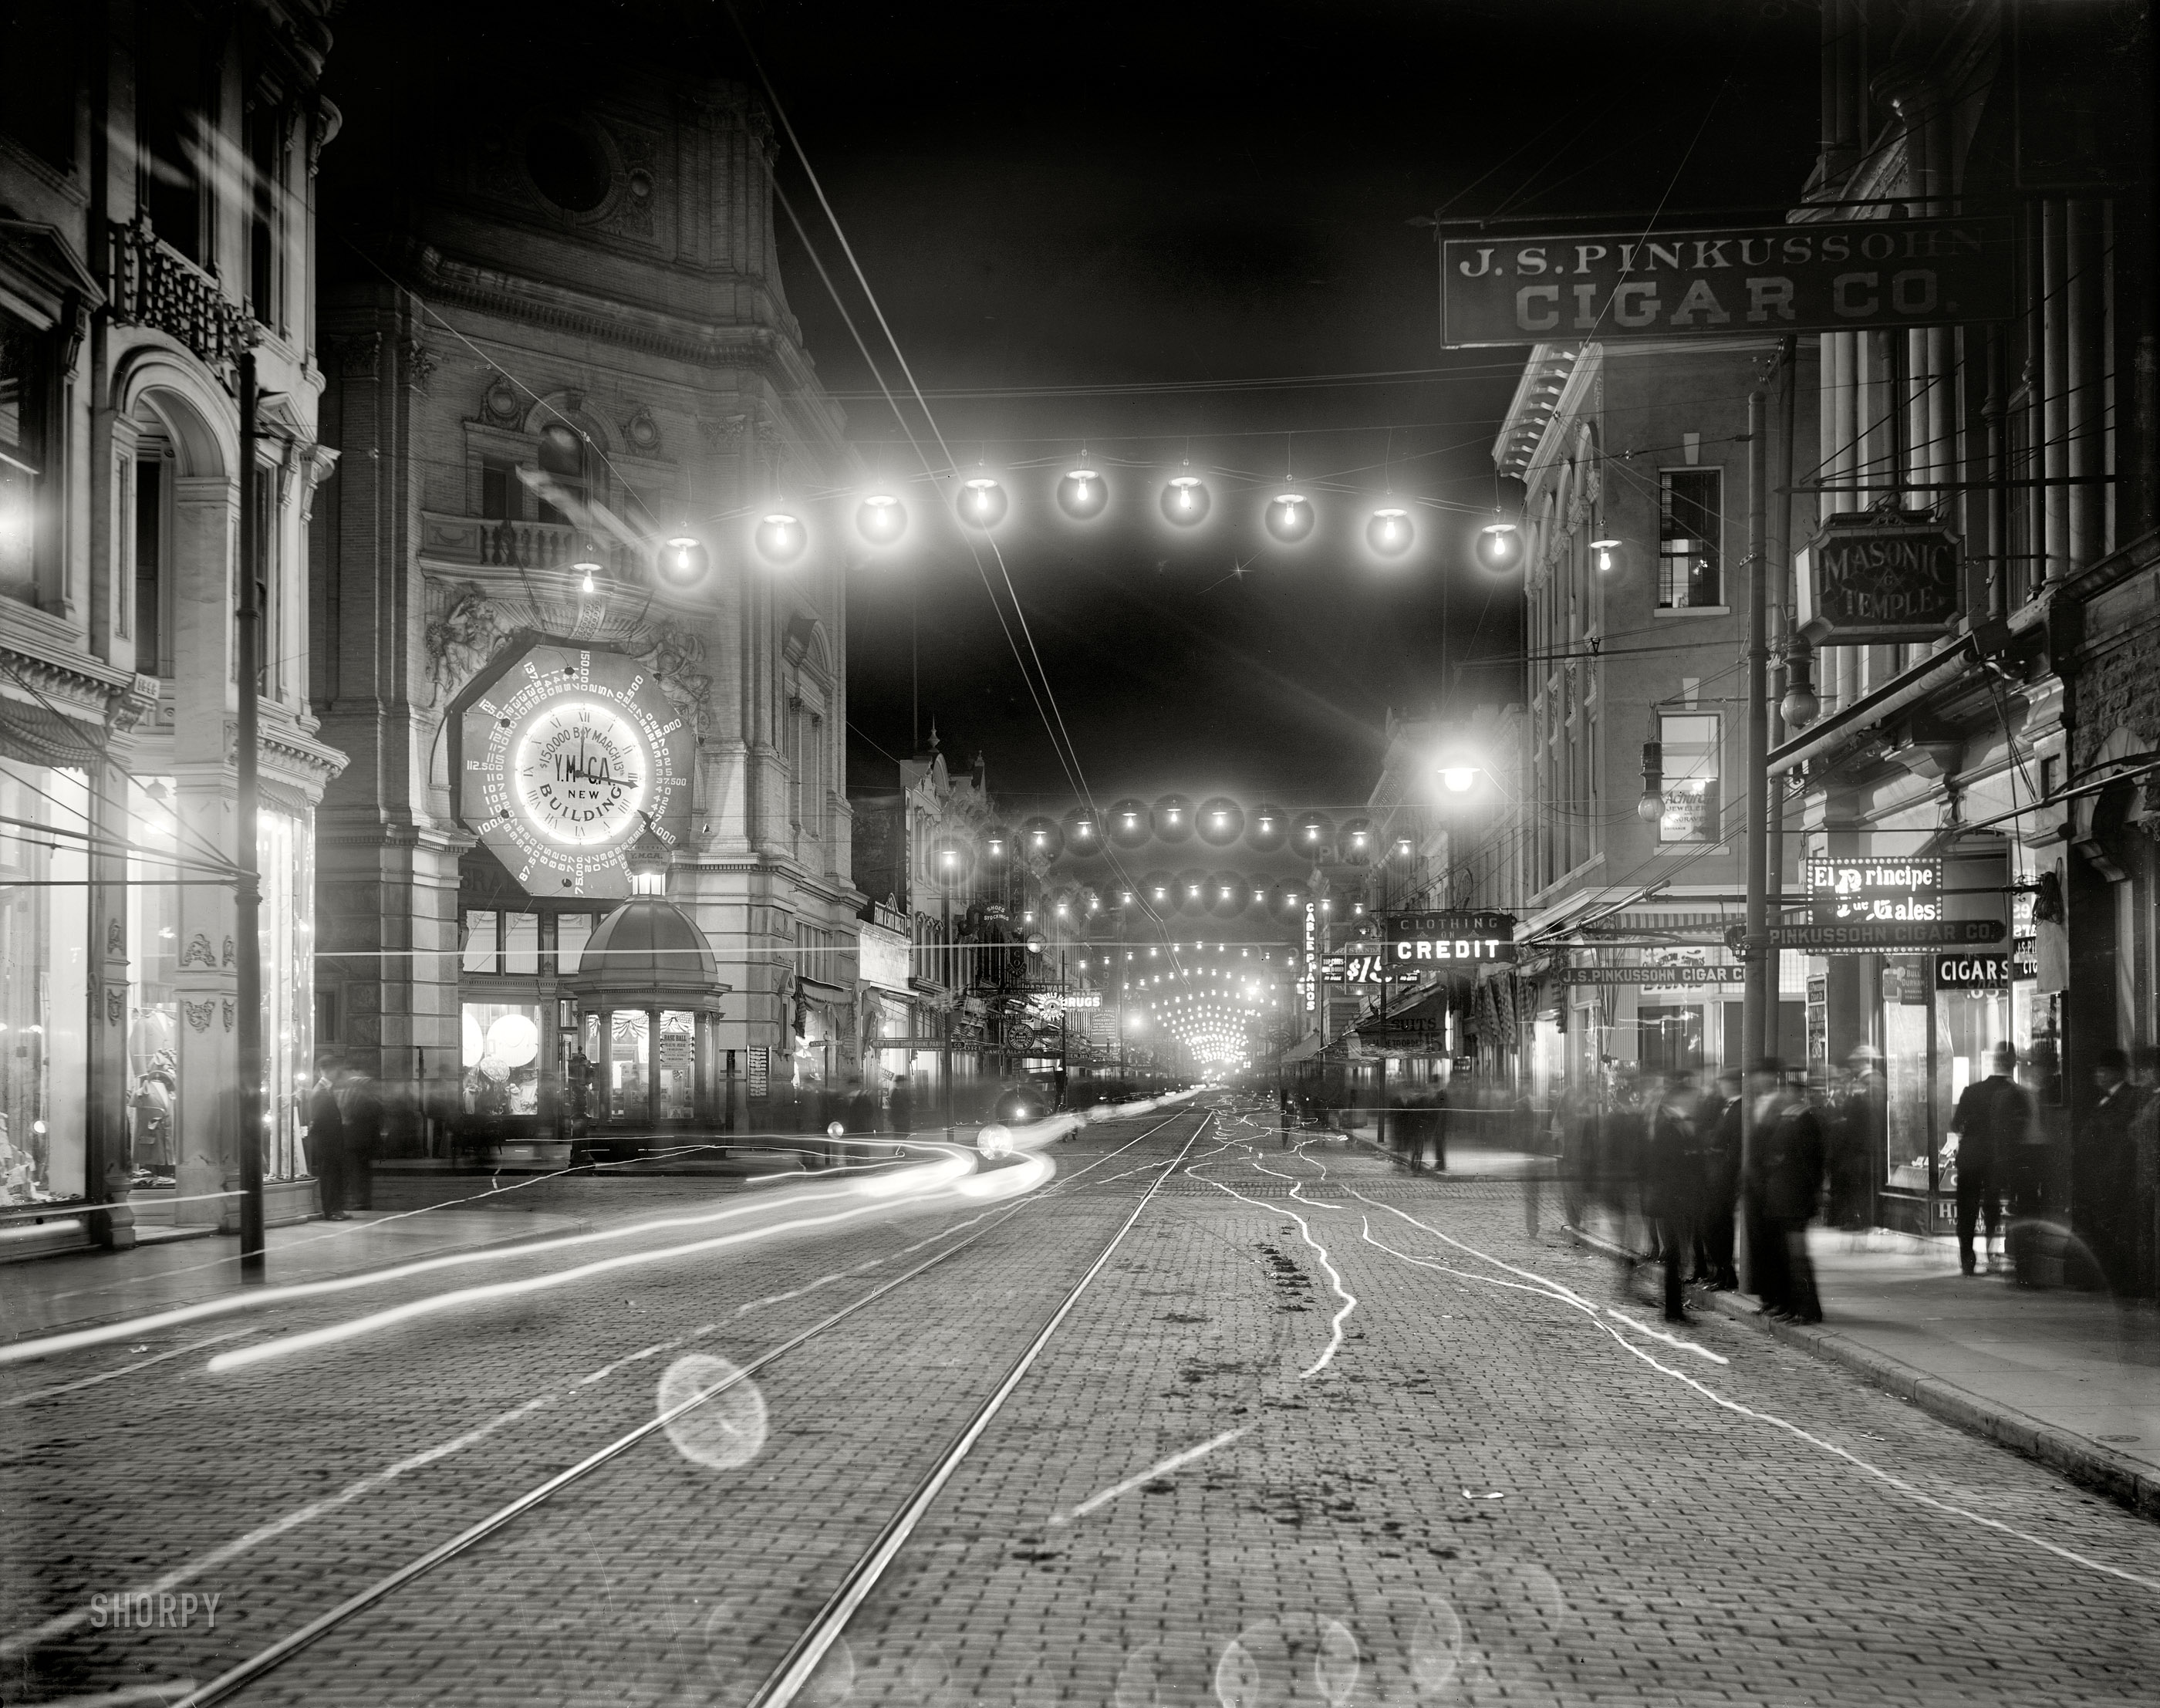 Charleston, South Carolina, circa 1910. "King Street lights at night." 8x10 inch dry plate glass negative, Detroit Publishing Company. View full size.